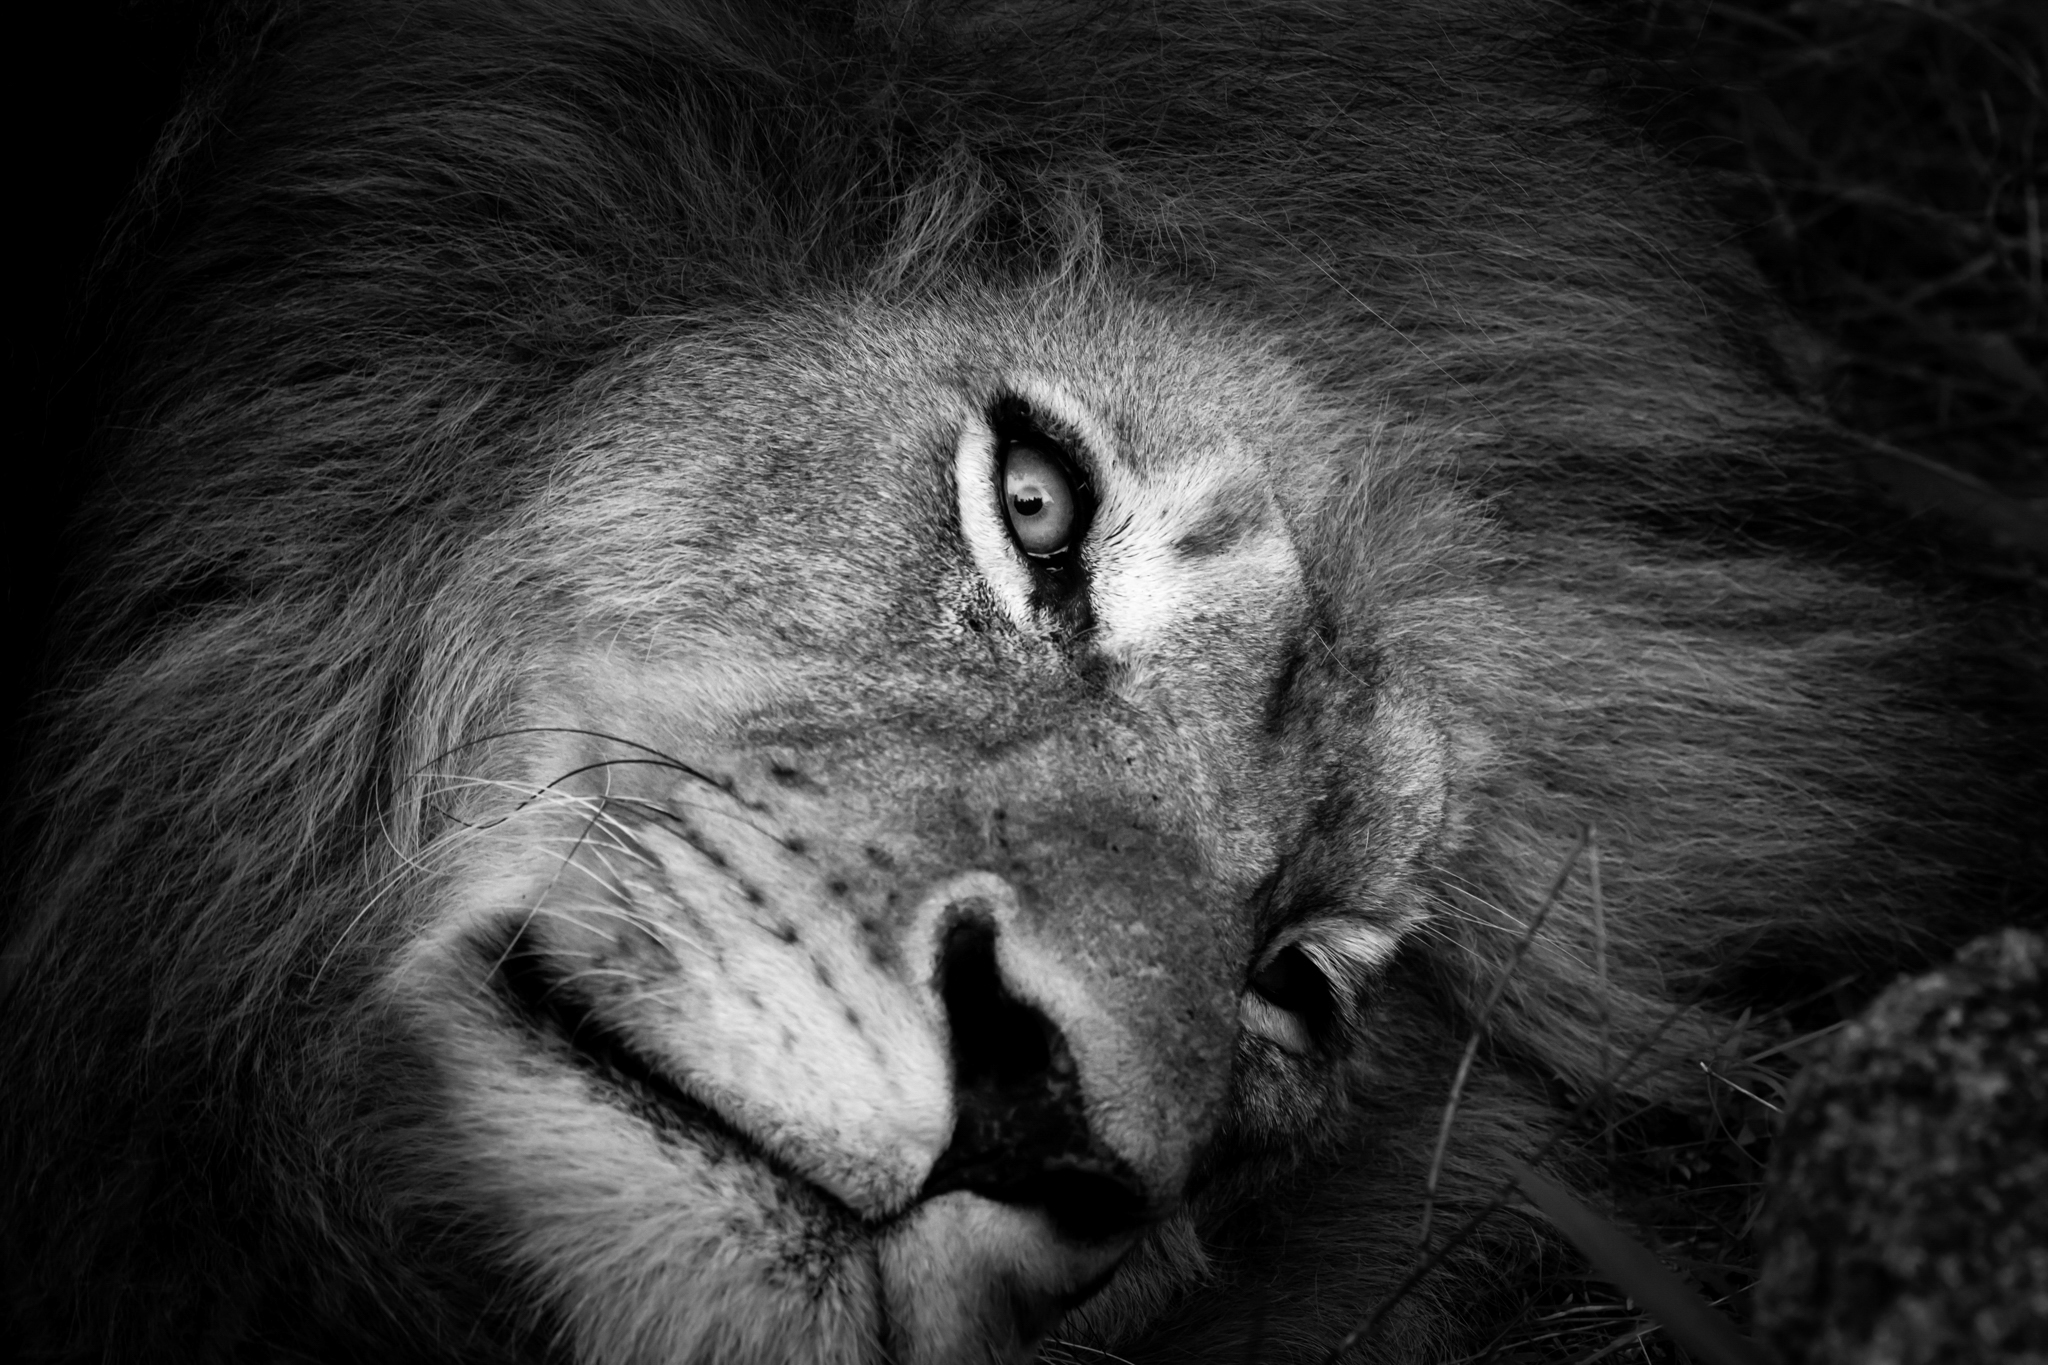 Close-up of a lion's face